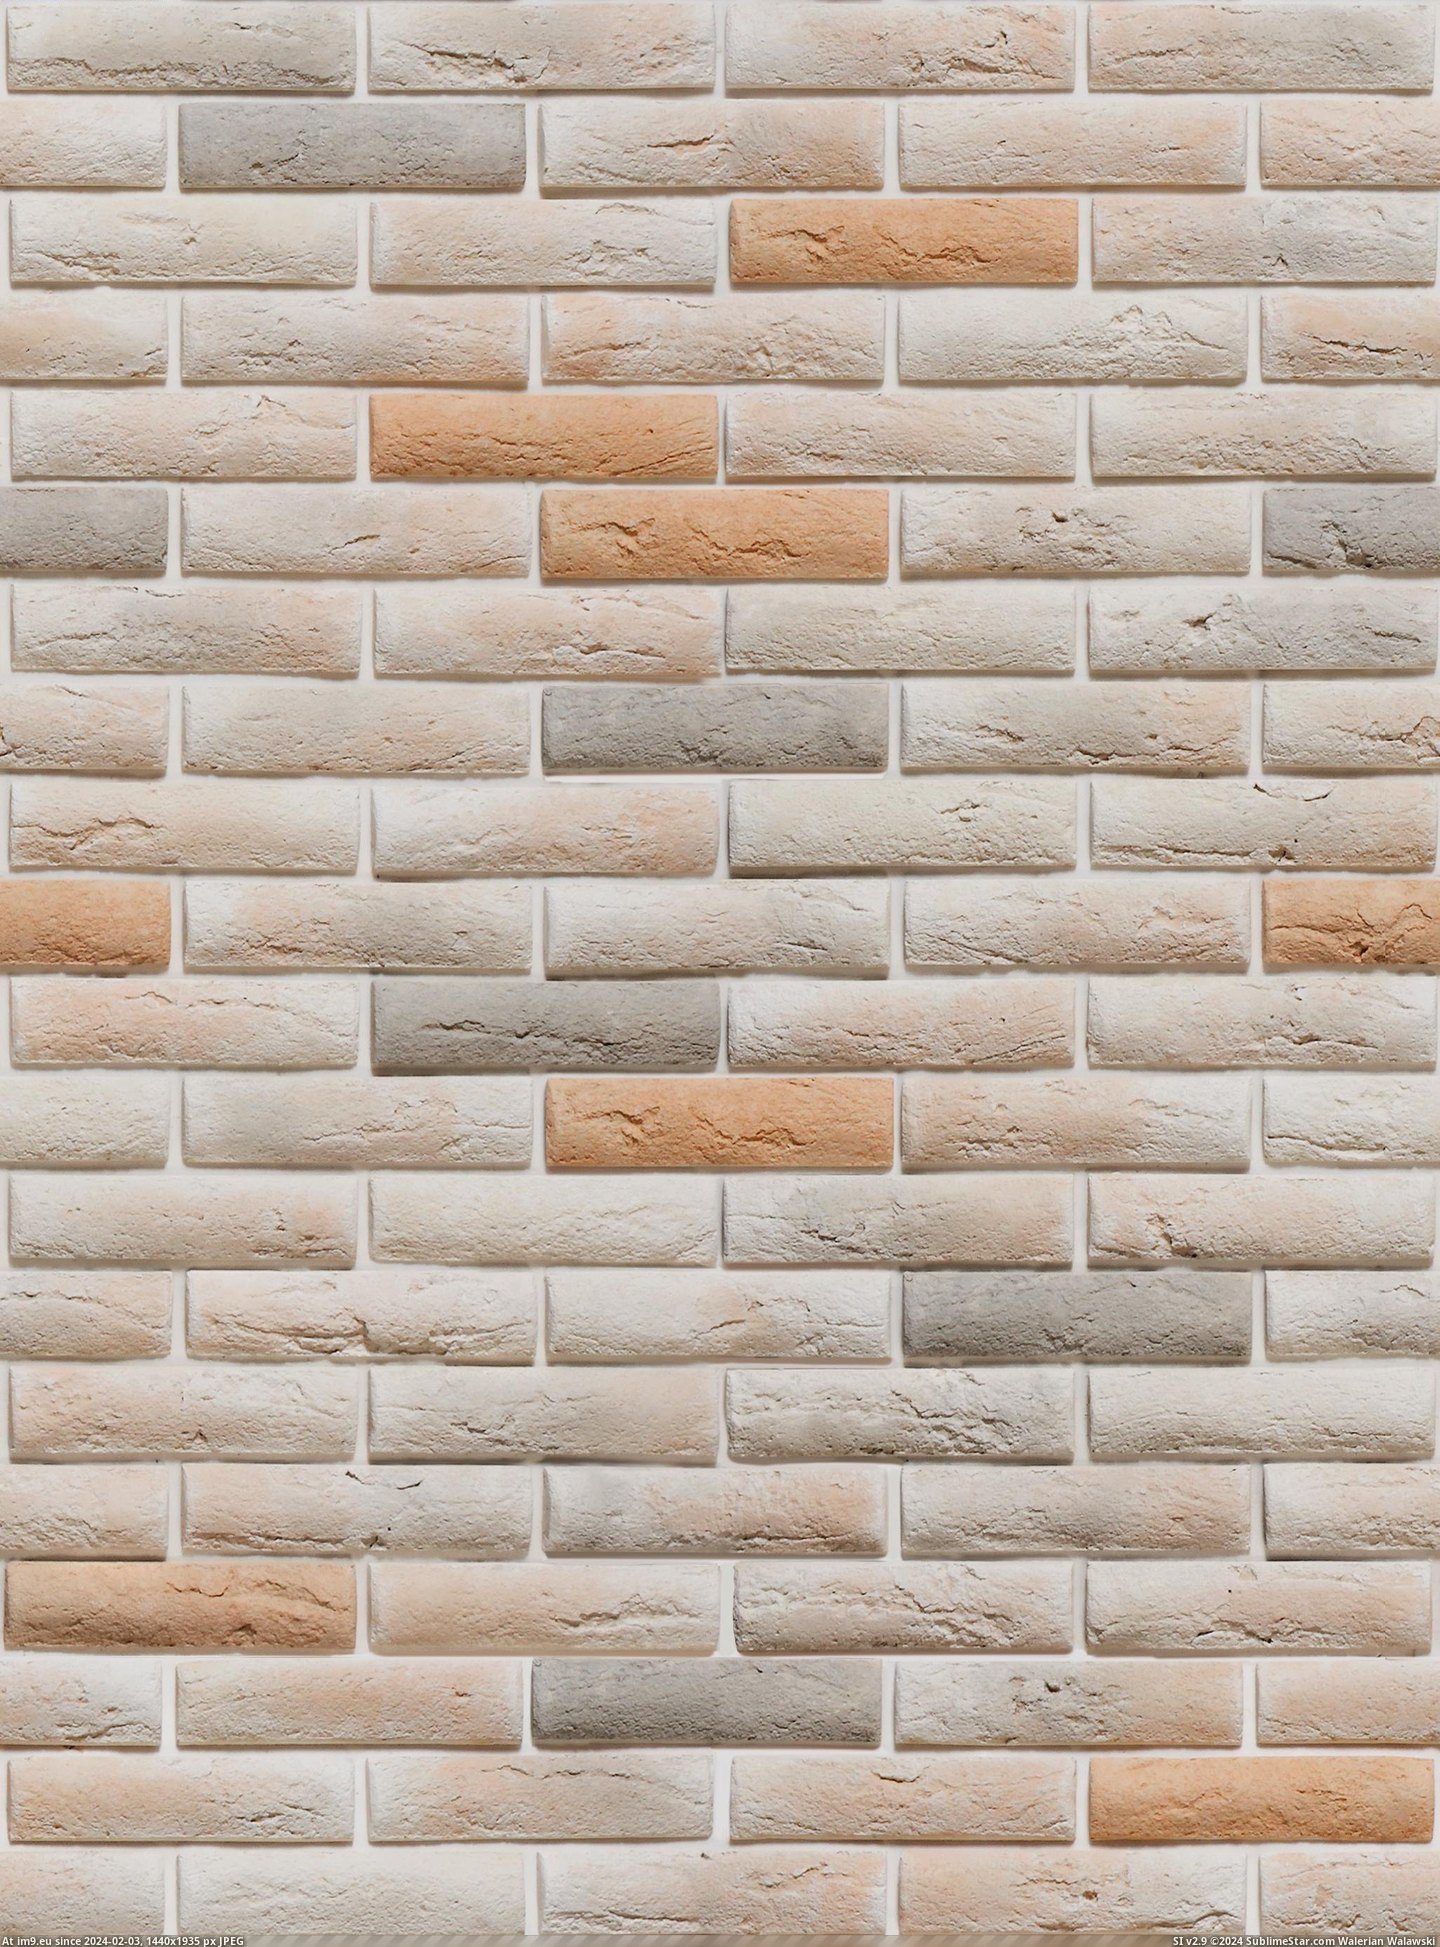 #Brick #Chester #Texture Chester (brick texture 1) Pic. (Изображение из альбом Brick walls textures and wallpapers))